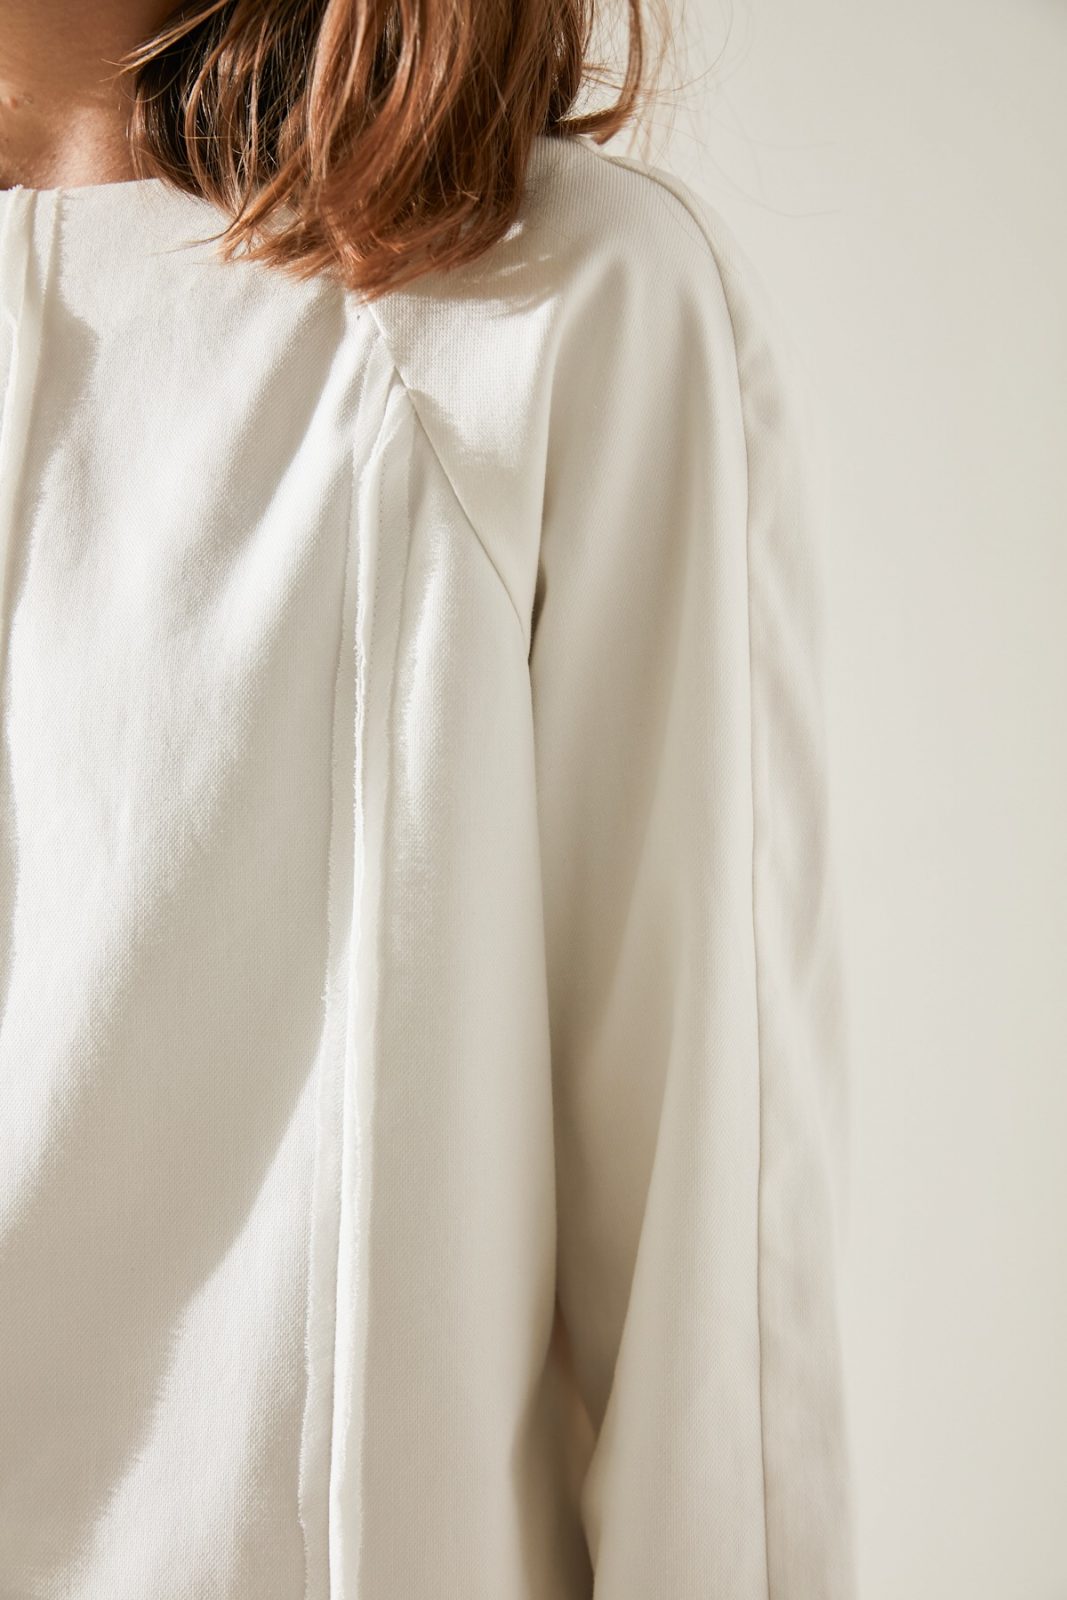 SKYE minimalist women clothing fashion Kate Chiffon Blouse Top white 3